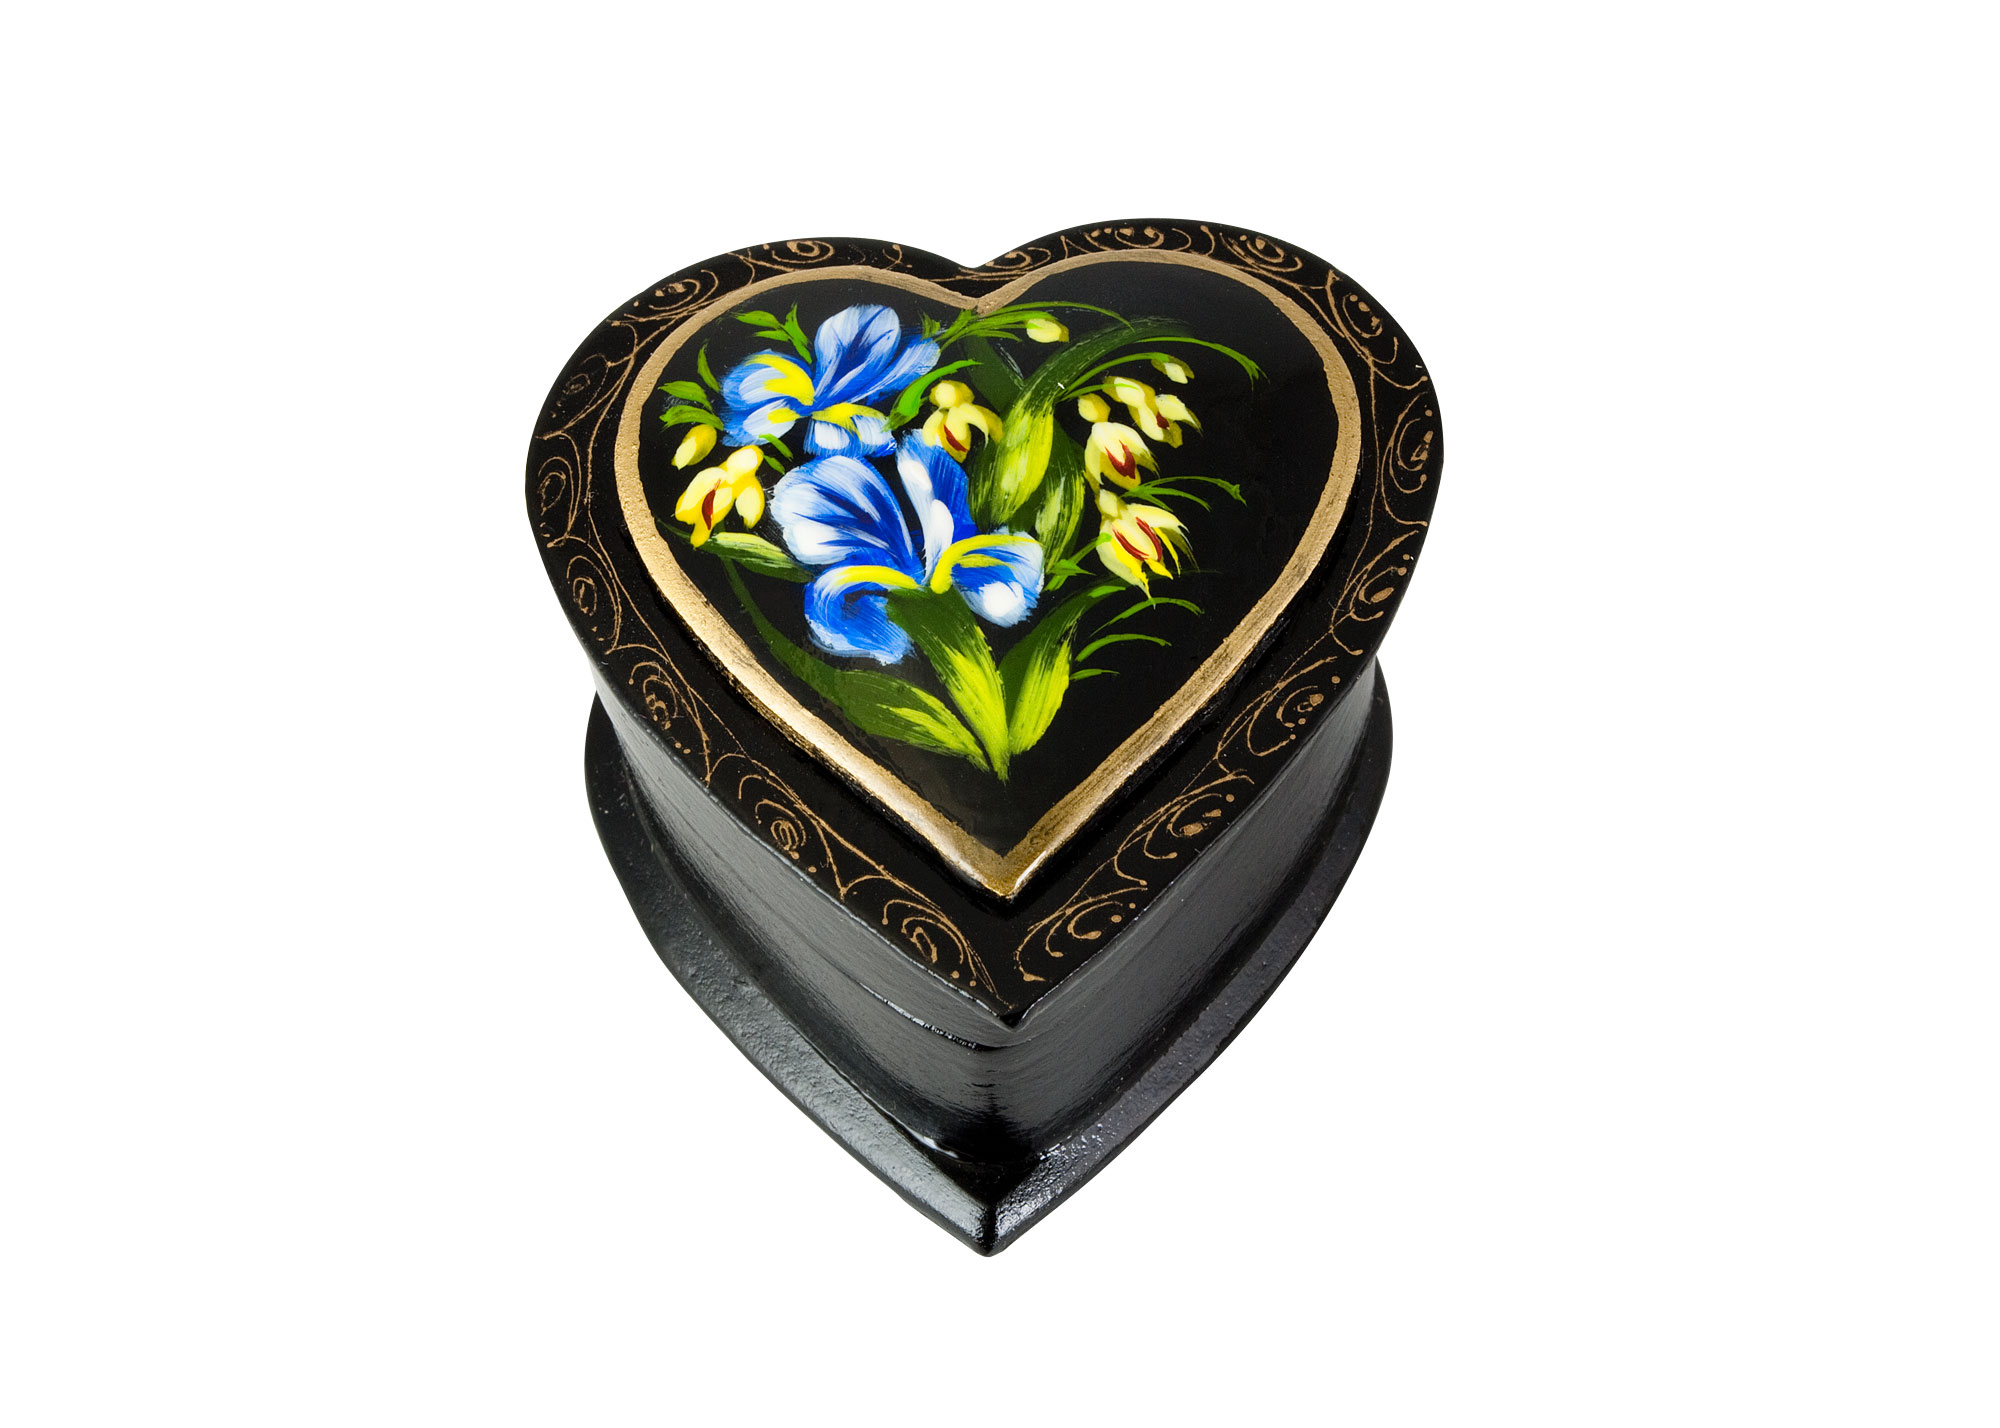 Buy Heart-Shaped Floral Lacquer Box at GoldenCockerel.com